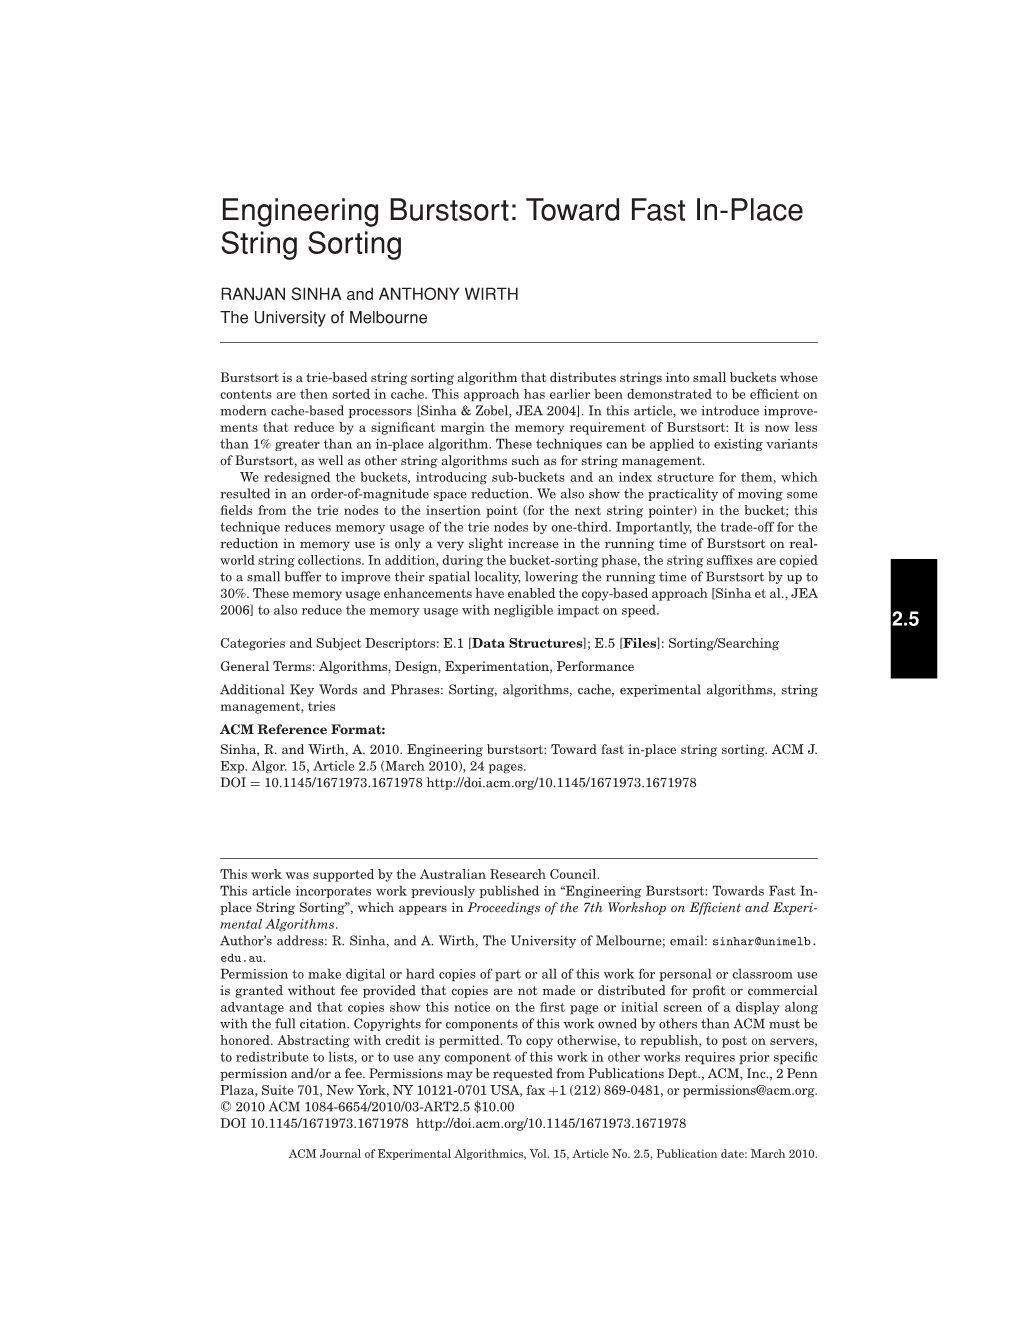 Engineering Burstsort: Toward Fast In-Place String Sorting